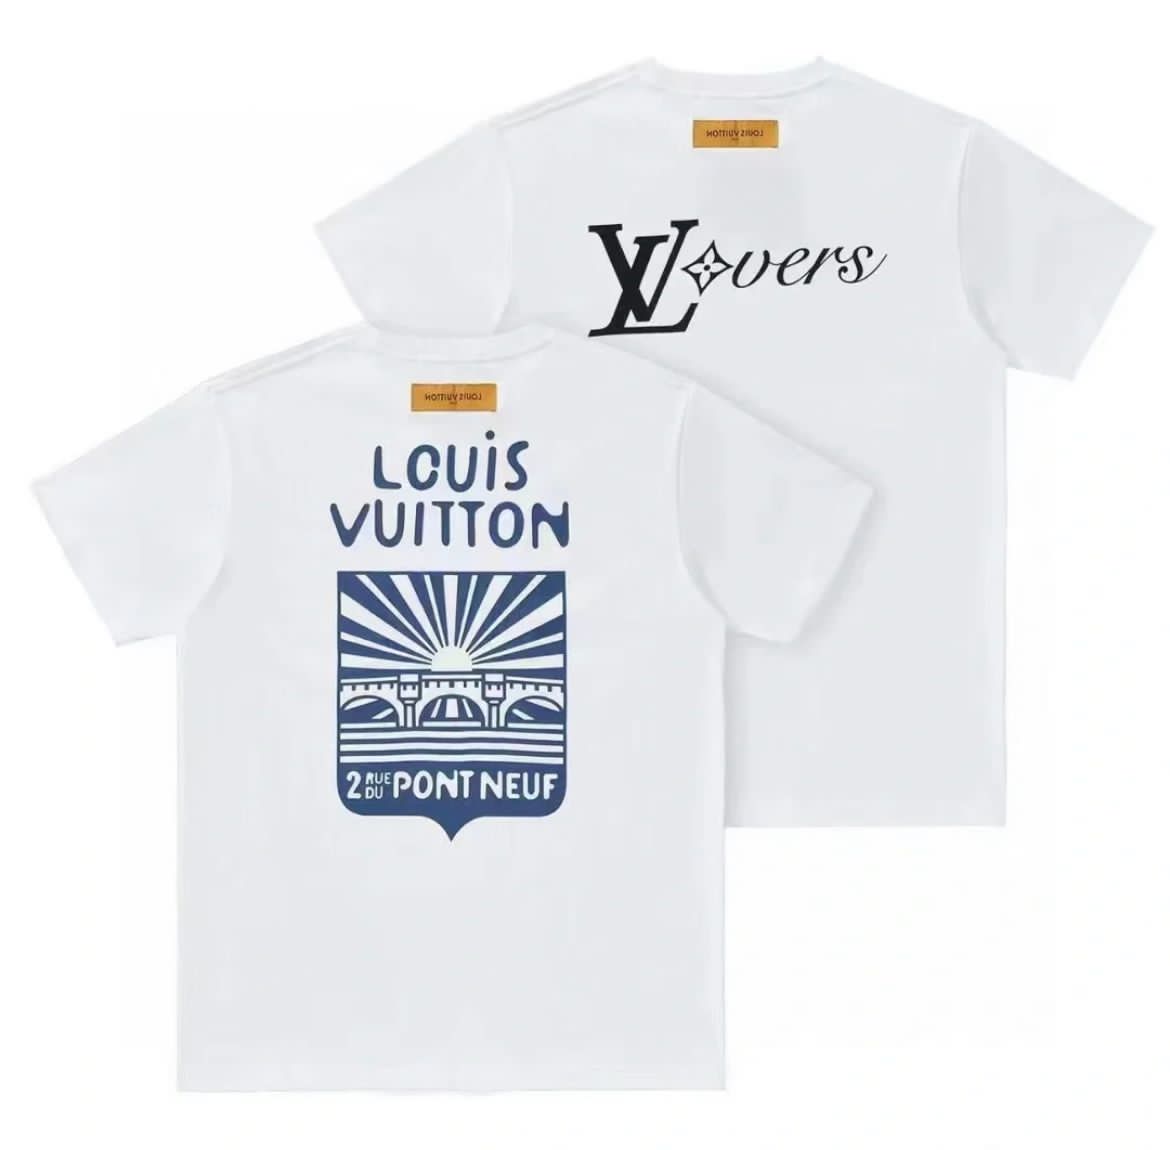 Louis Vuitton Staff Tee